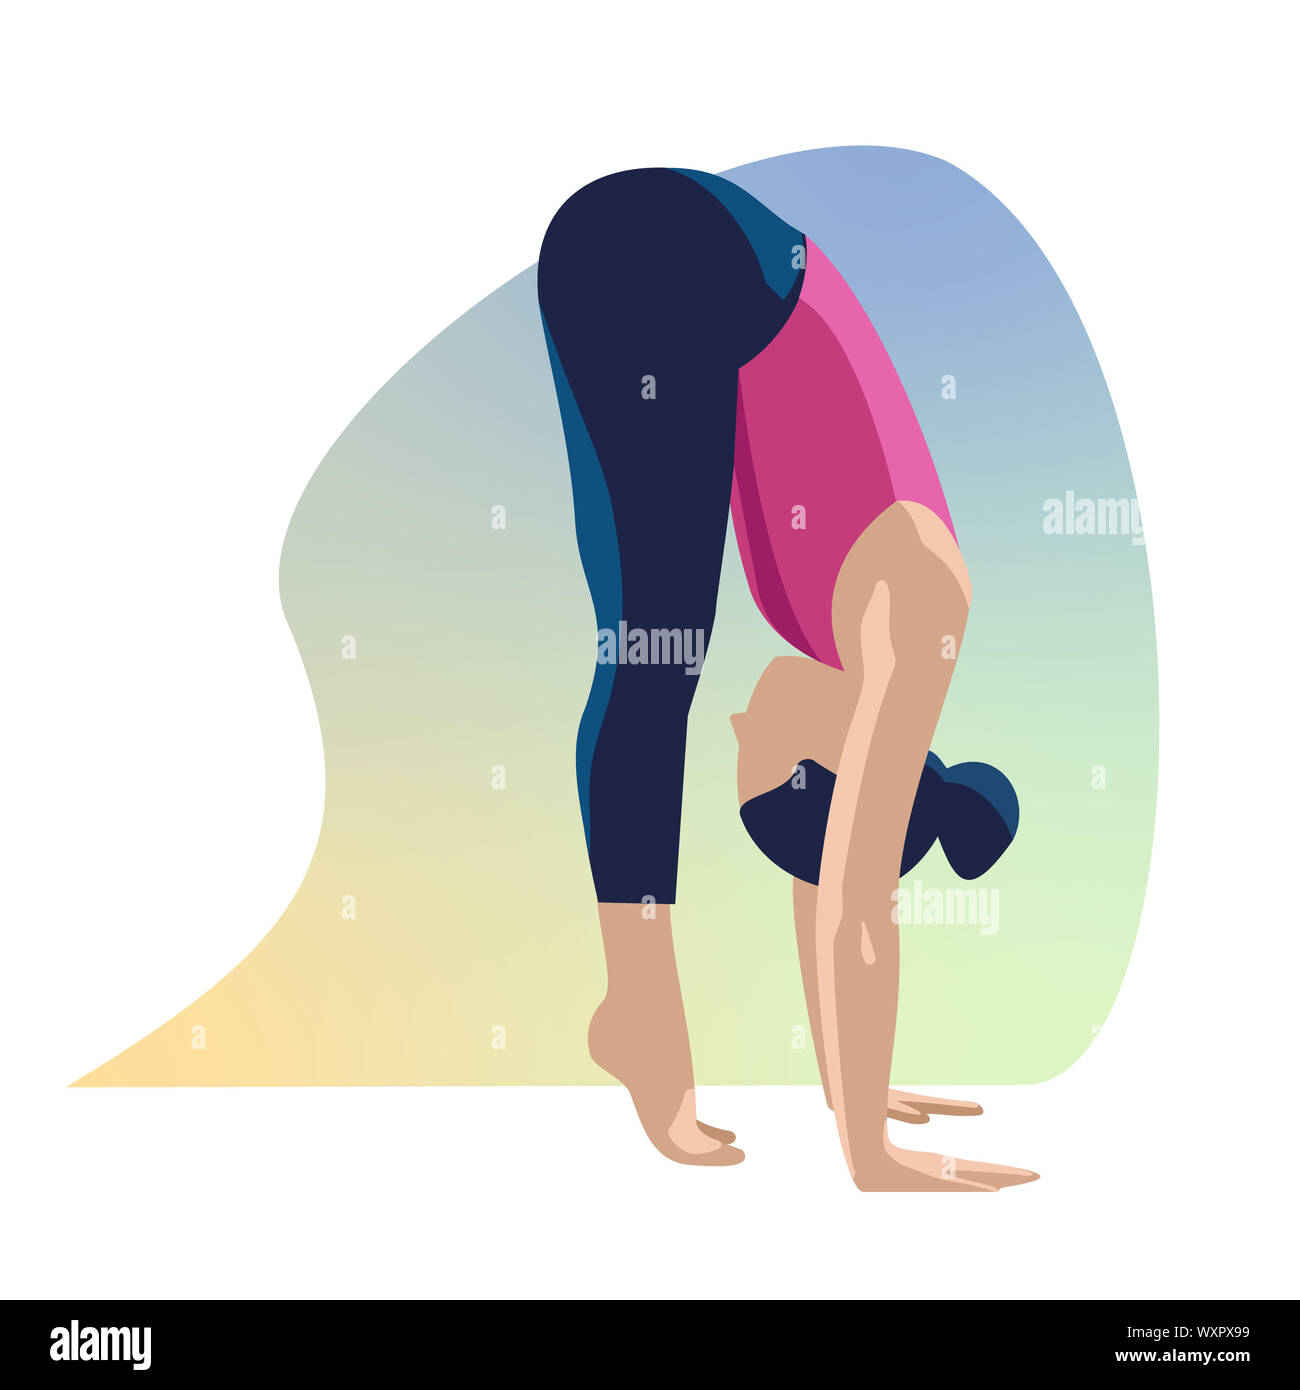 Advanced yoga poses Royalty Free Vector Image - VectorStock